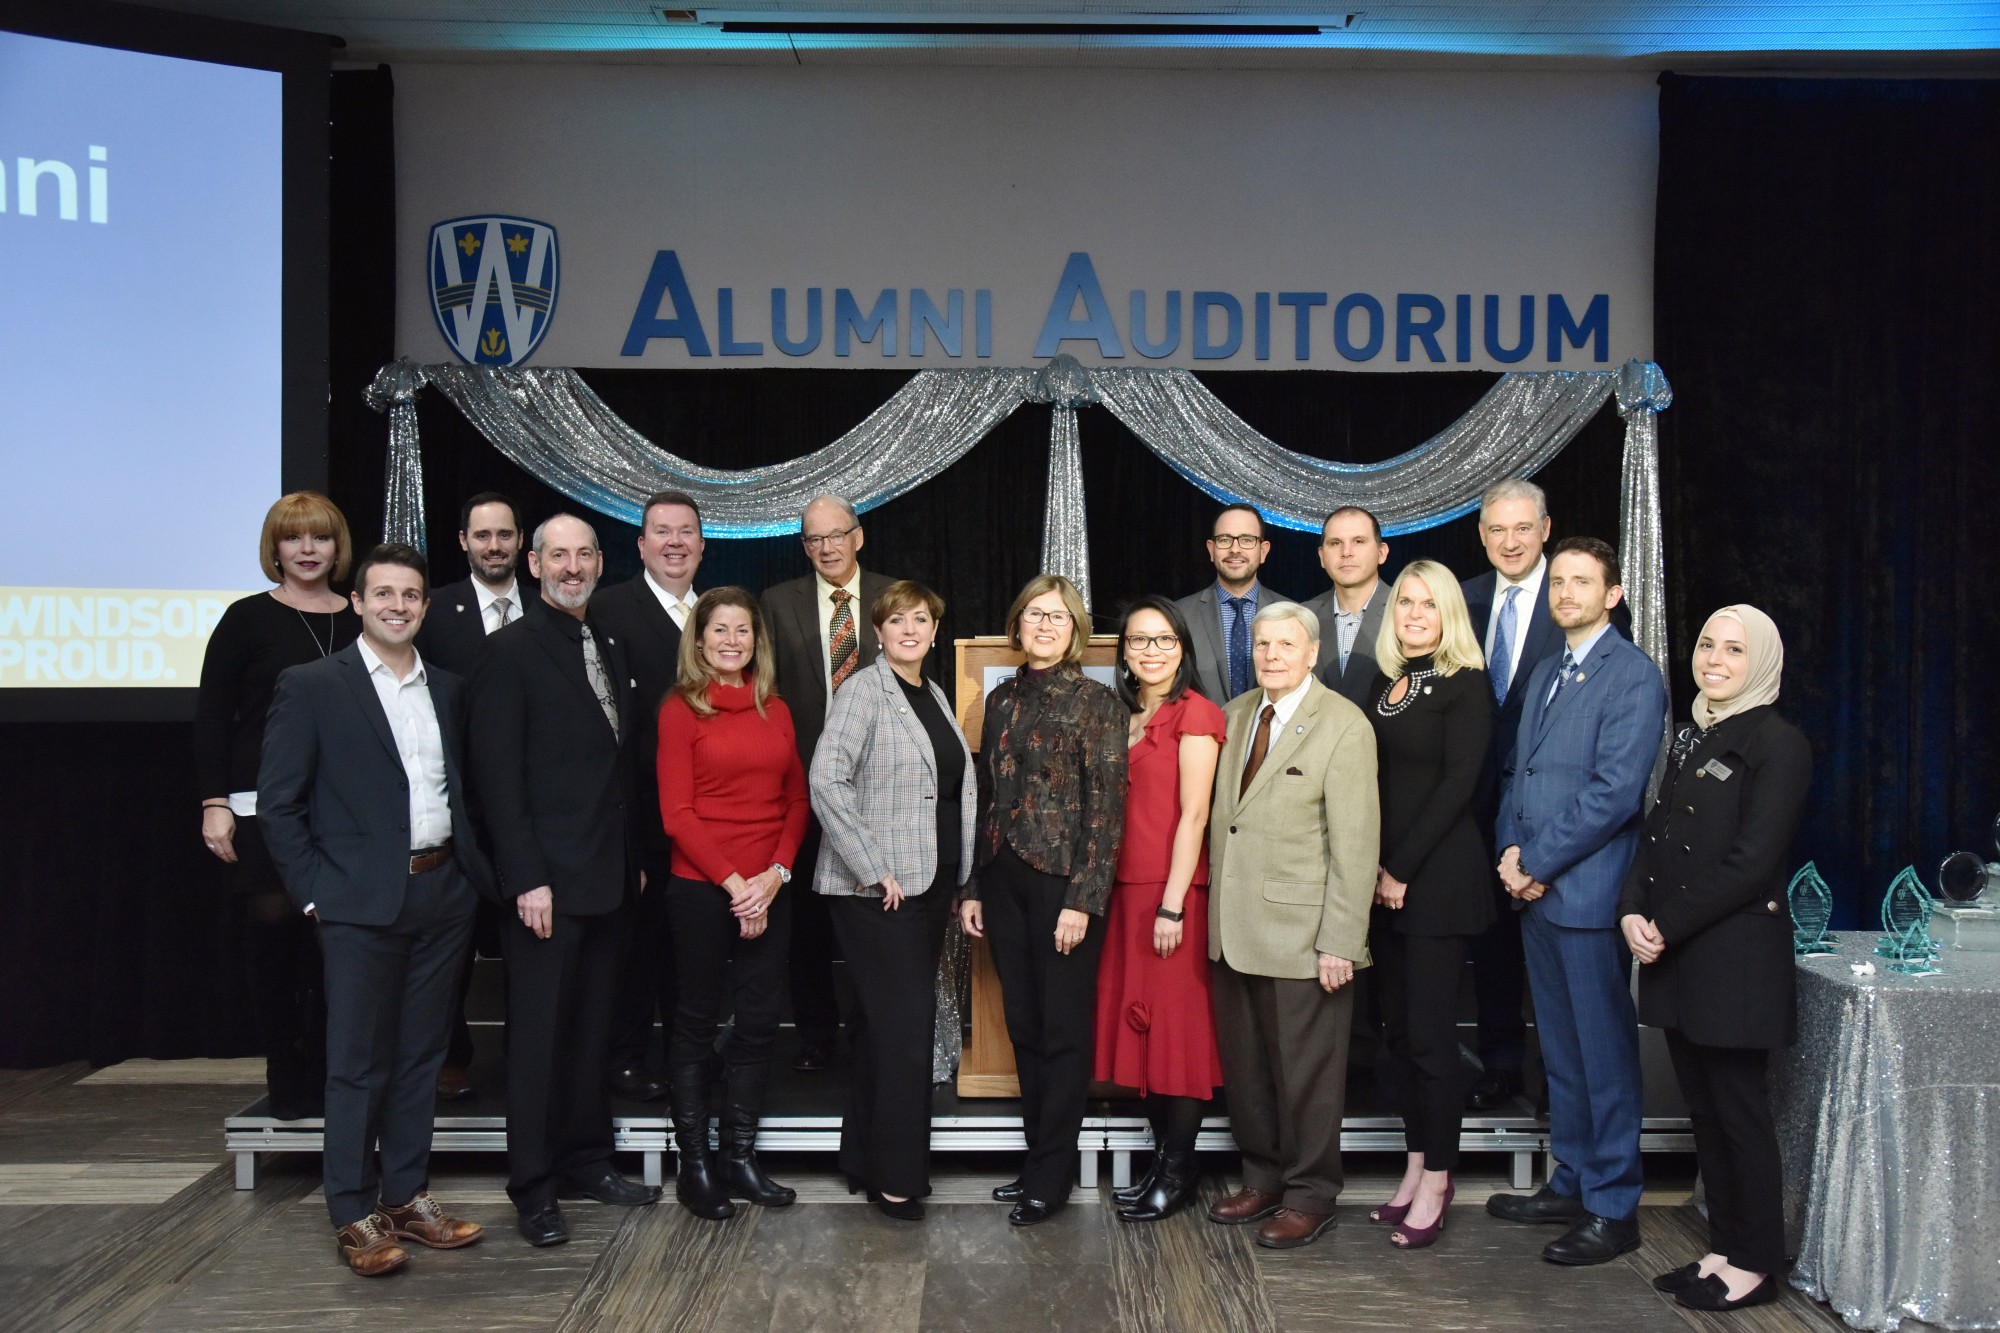 Alumni Association Board of Directors (2018) group photo.